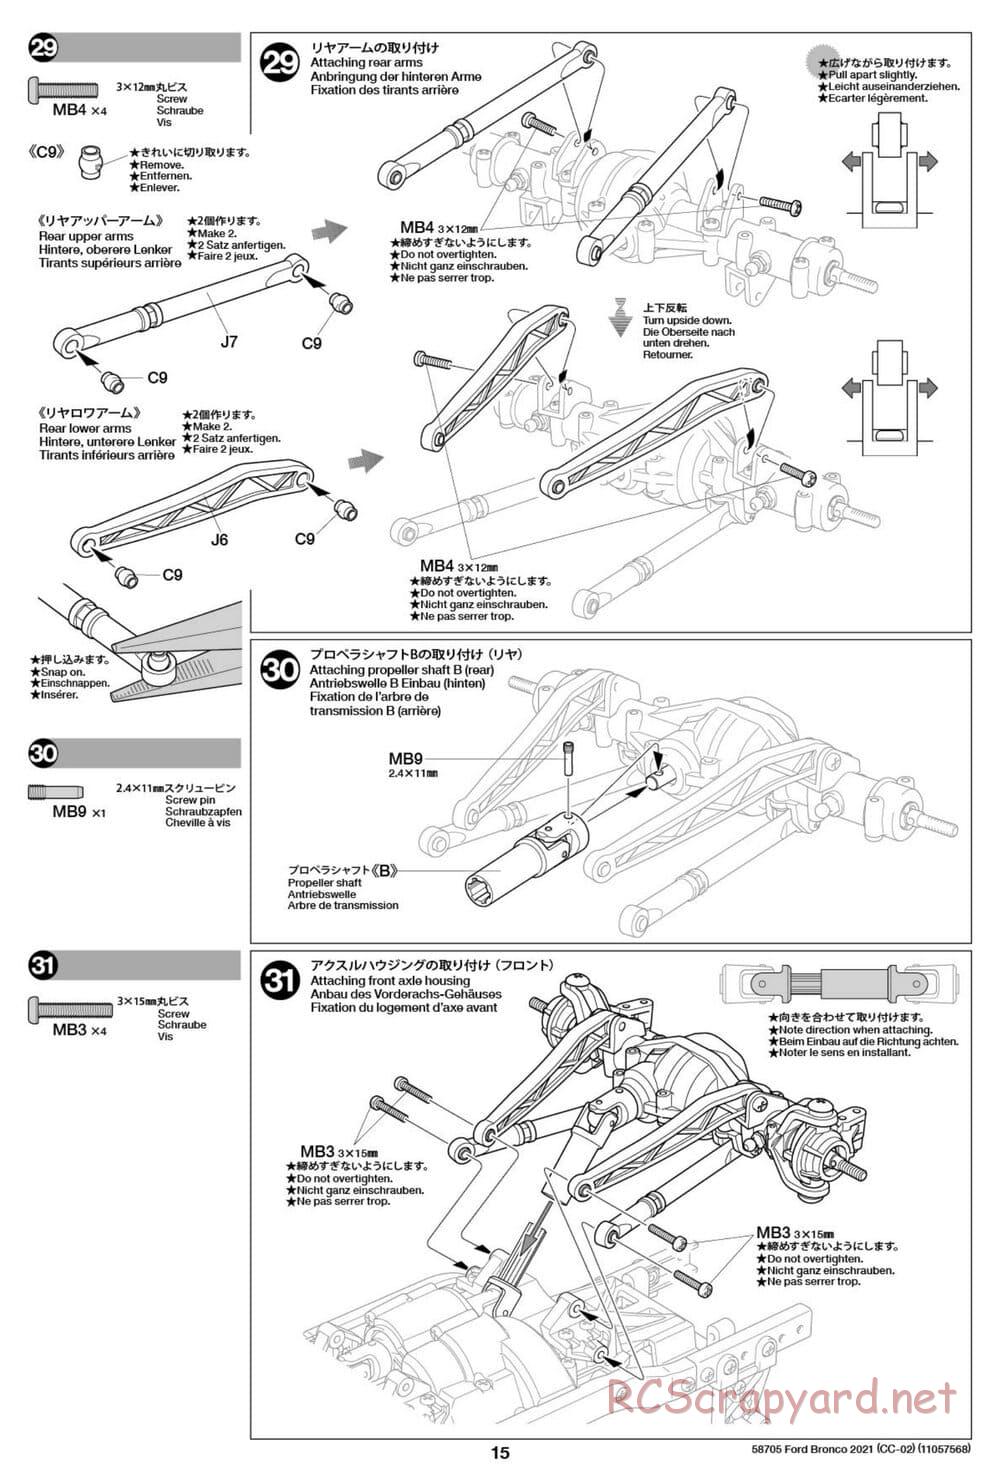 Tamiya - Ford Bronco 2021 - CC-02 Chassis - Manual - Page 15